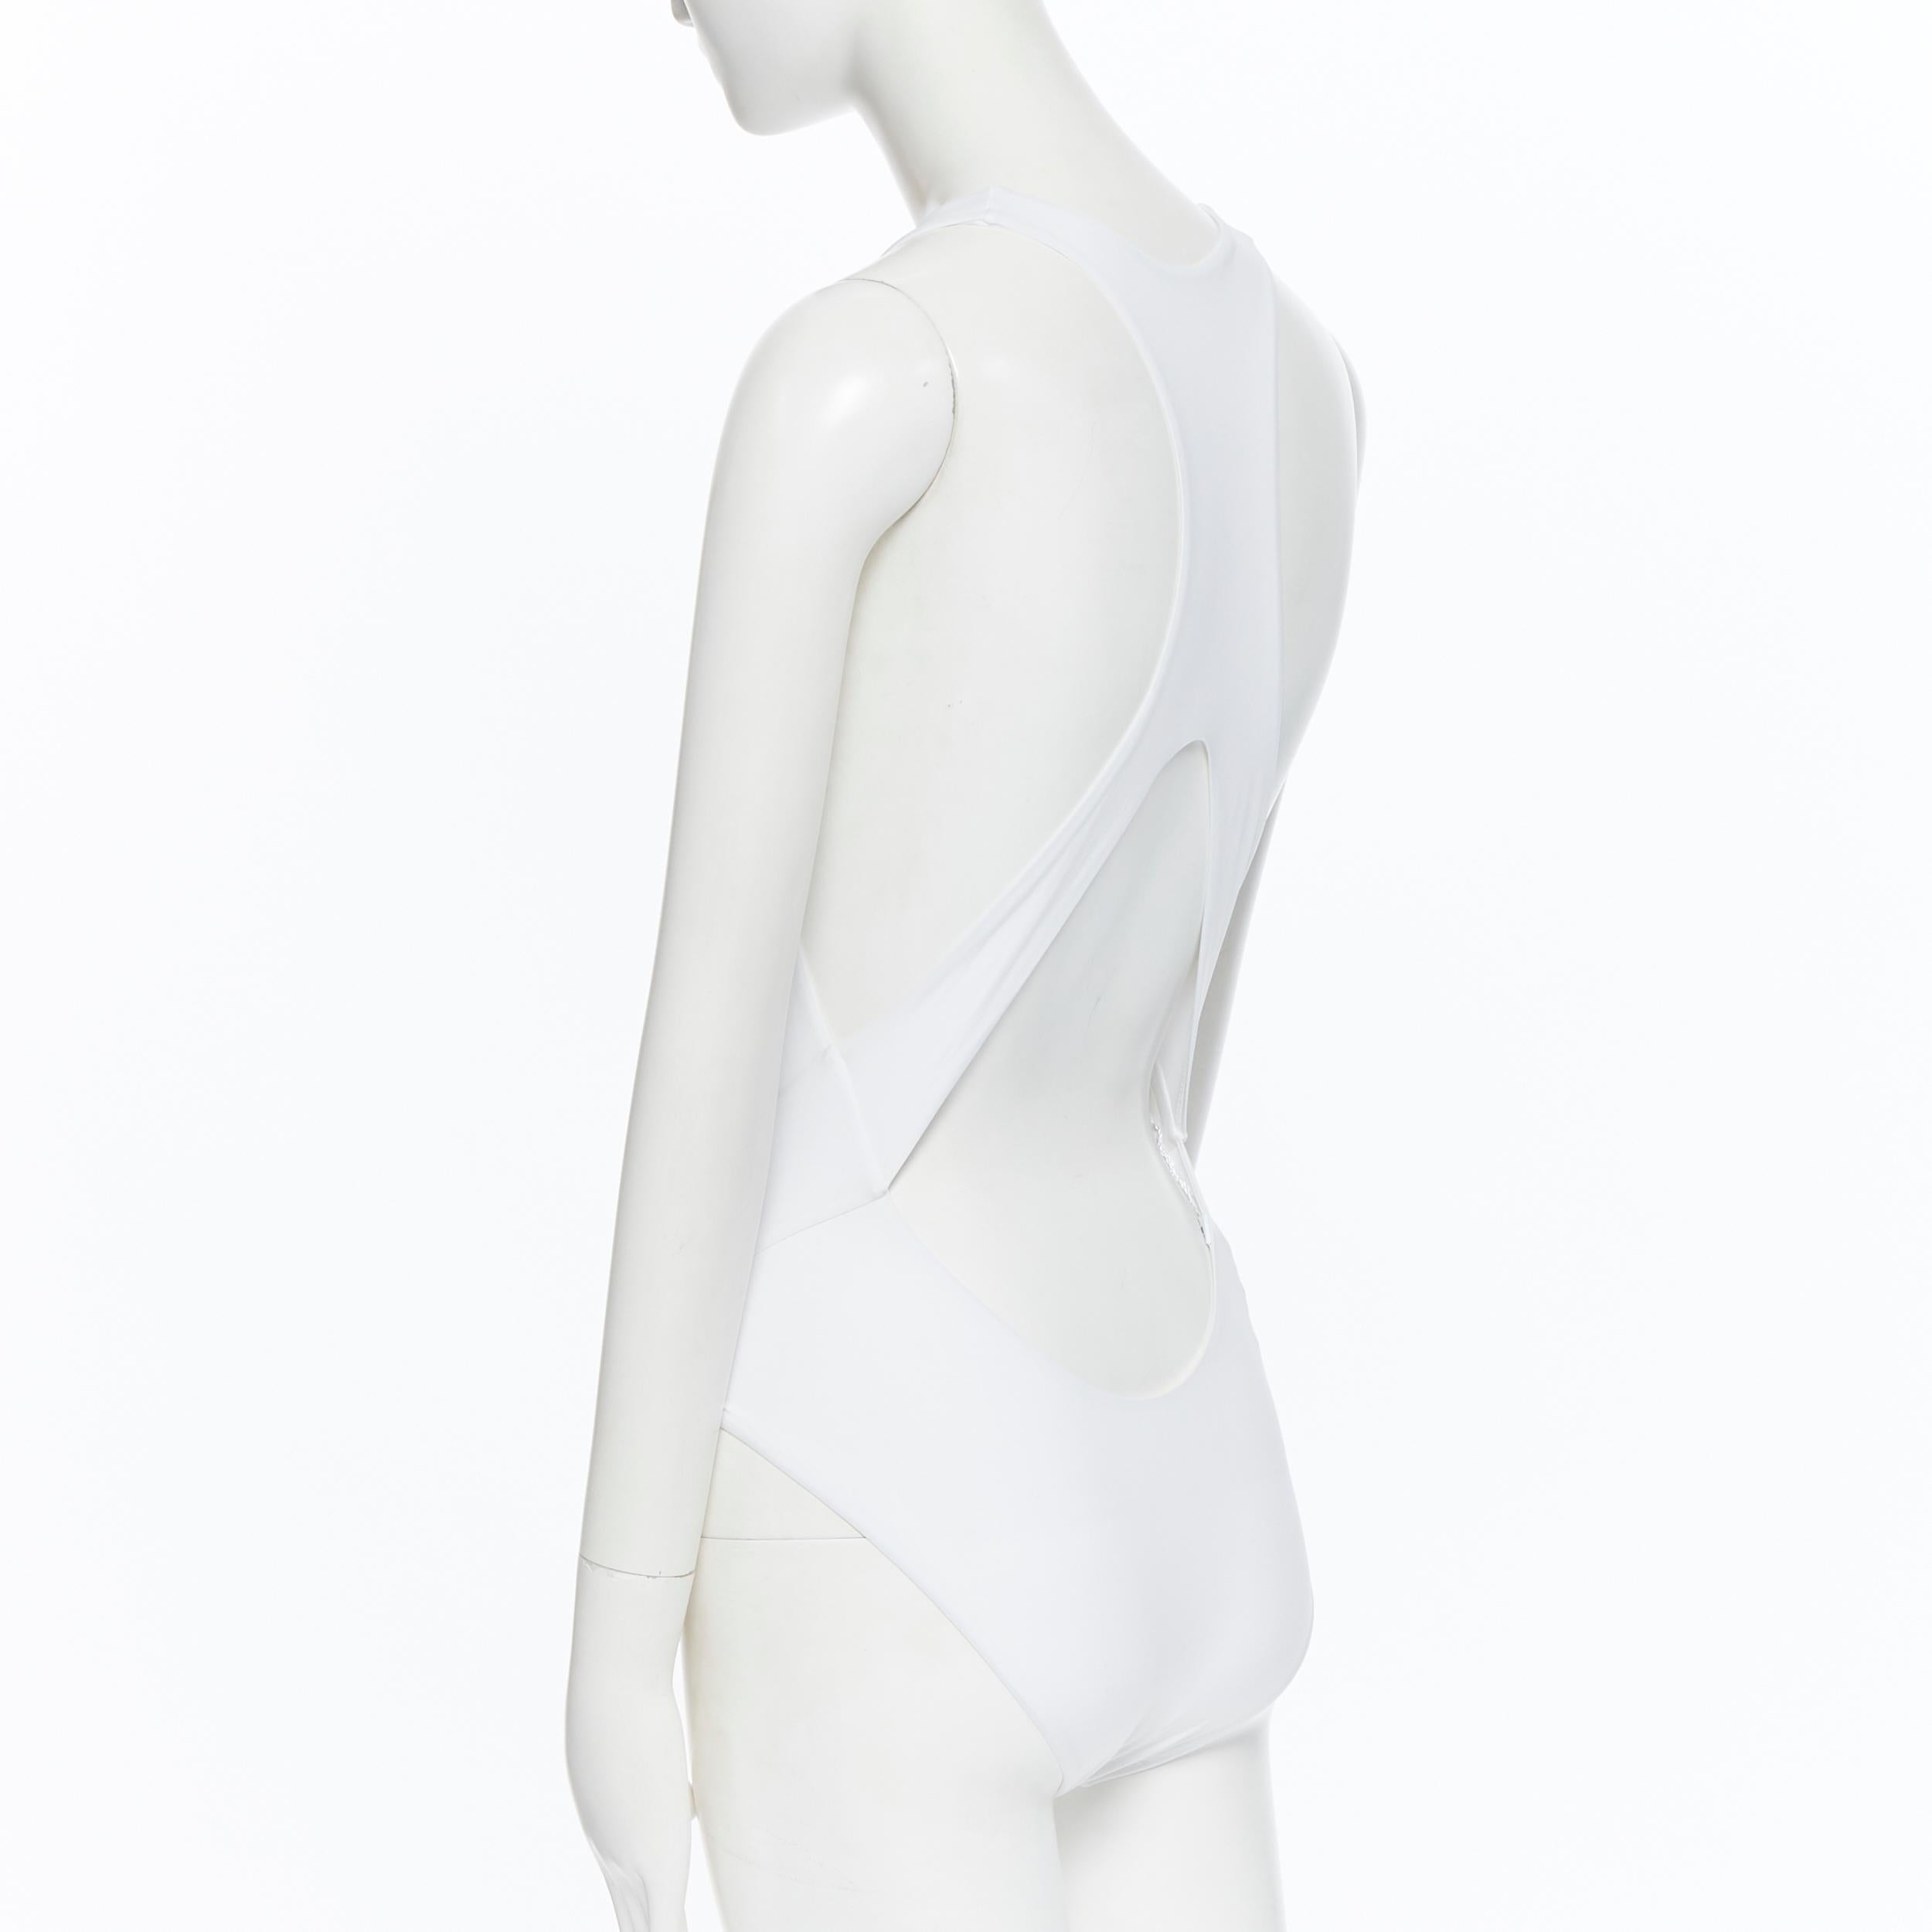 Gray new LA PERLA white gold sequins nude mesh insert plunge neck monokini IT44B M